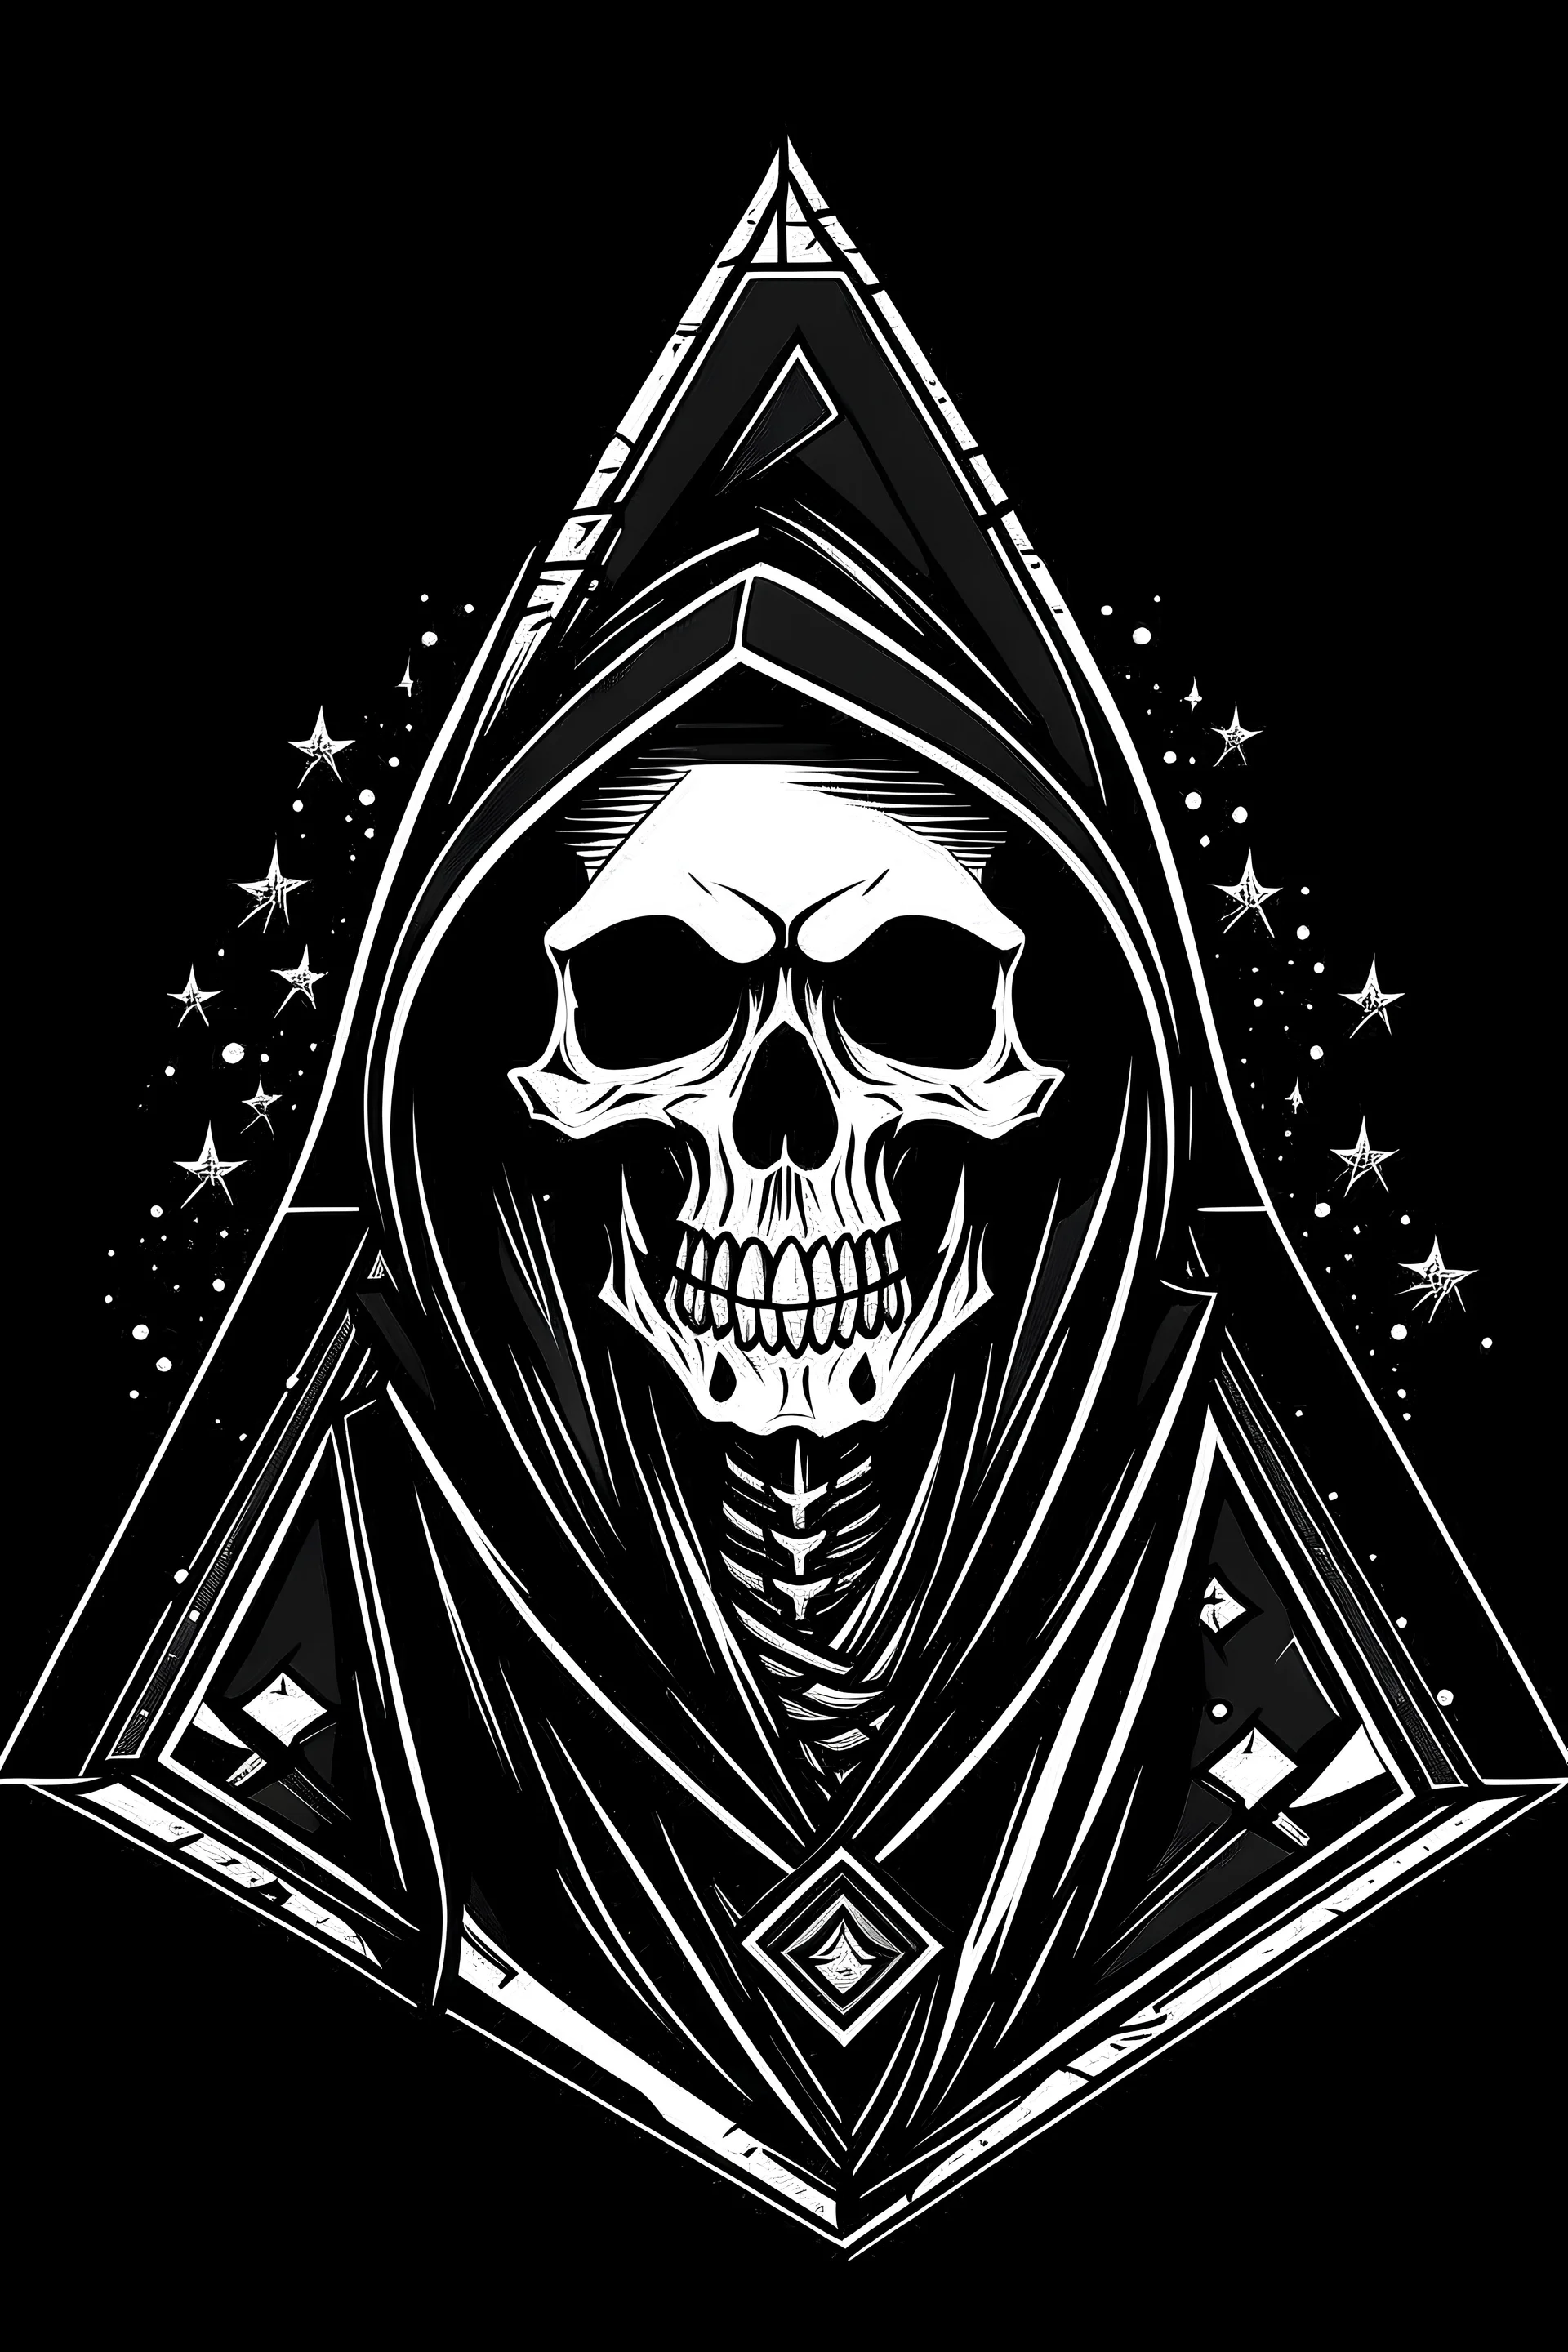 finko skeleton in a black hooded cloak drawn in a retro mascot cartoon style, inside a light diamond shape on a black background, monochromatic